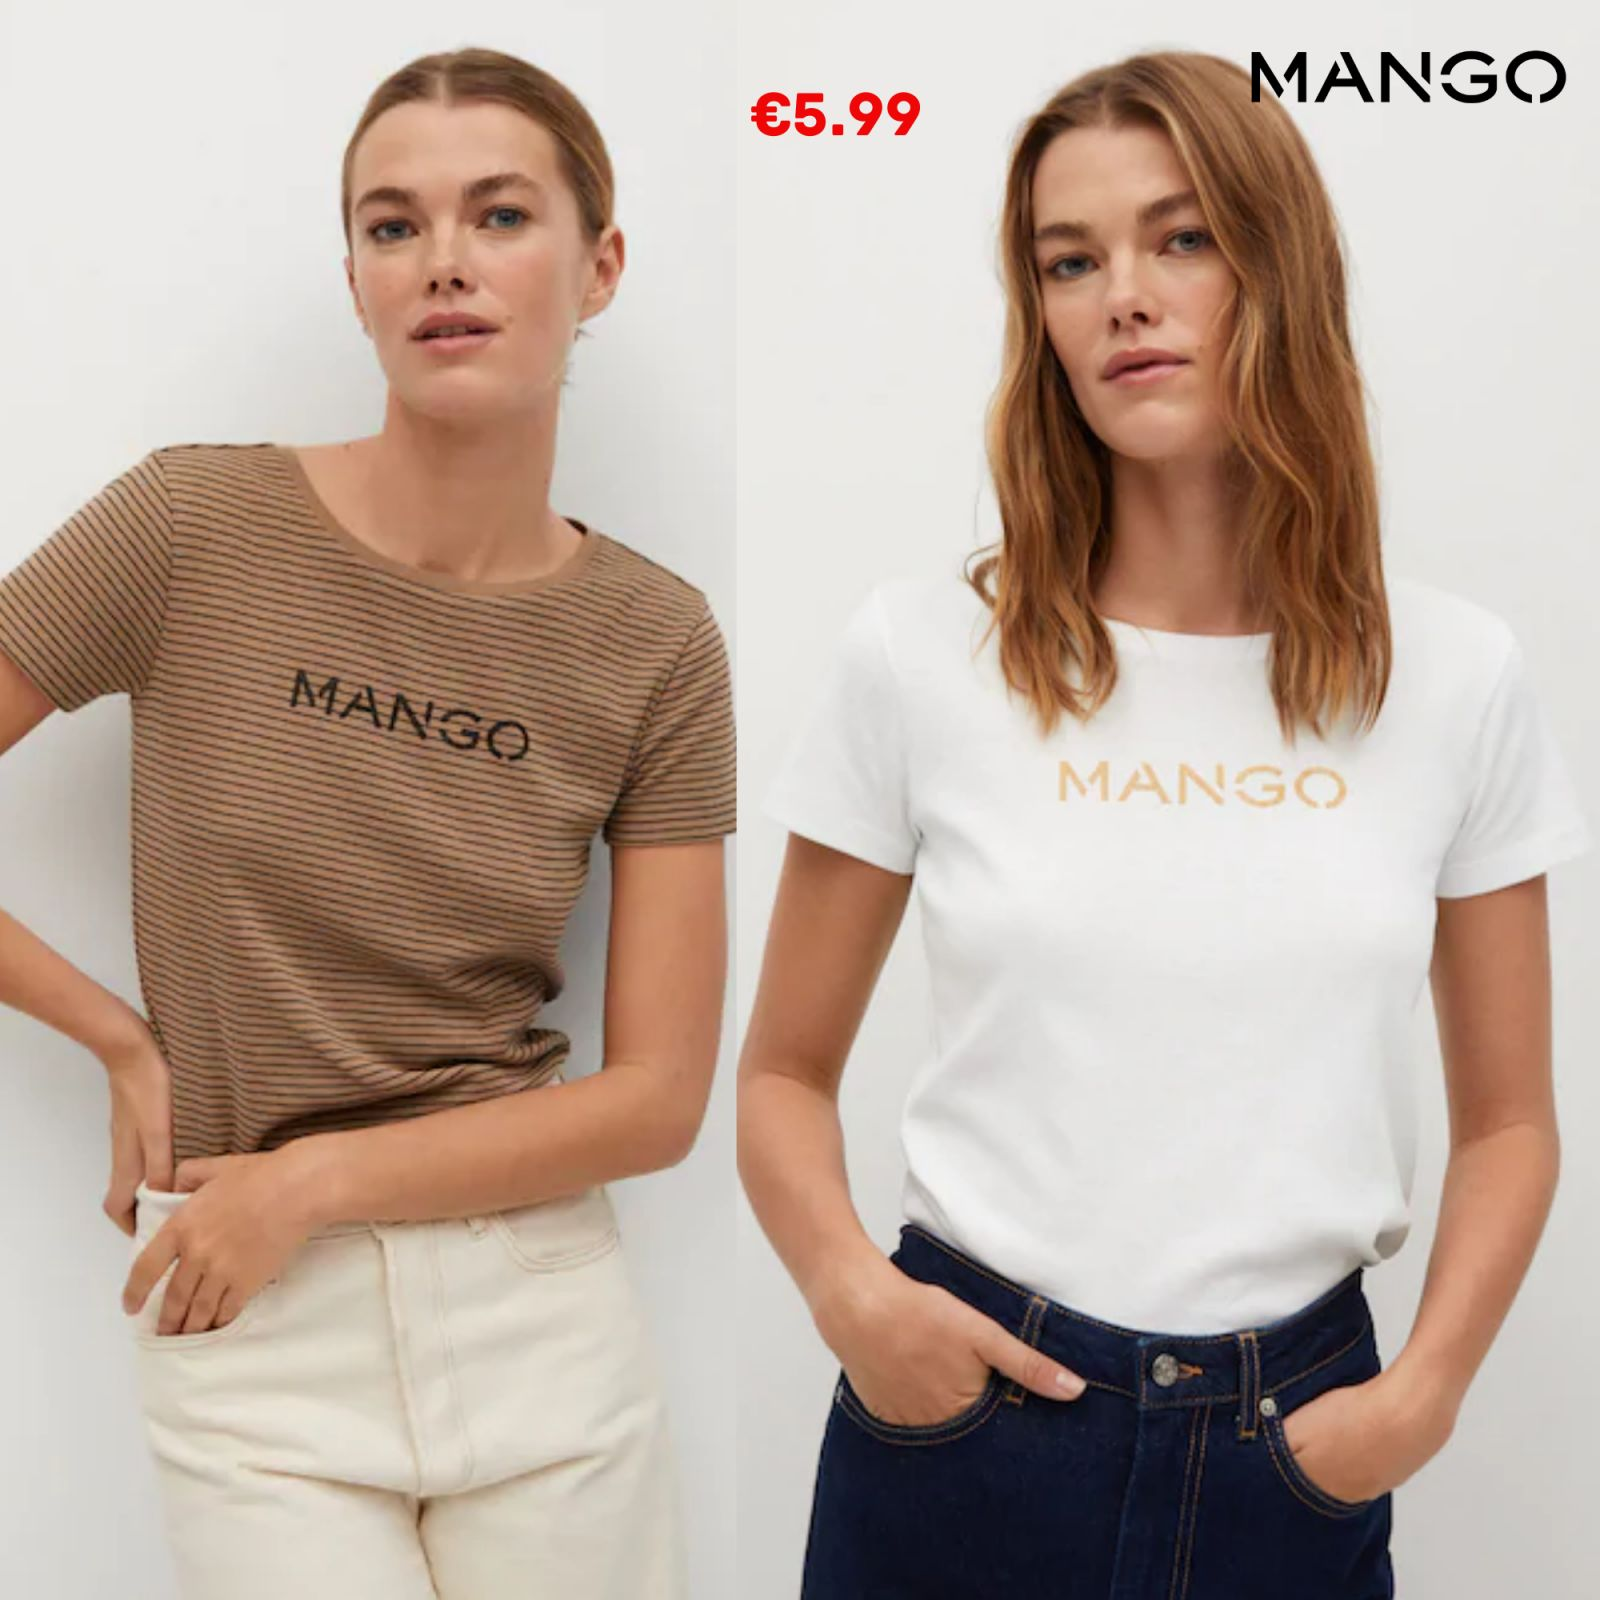 Mango 30 03 – Telegraph